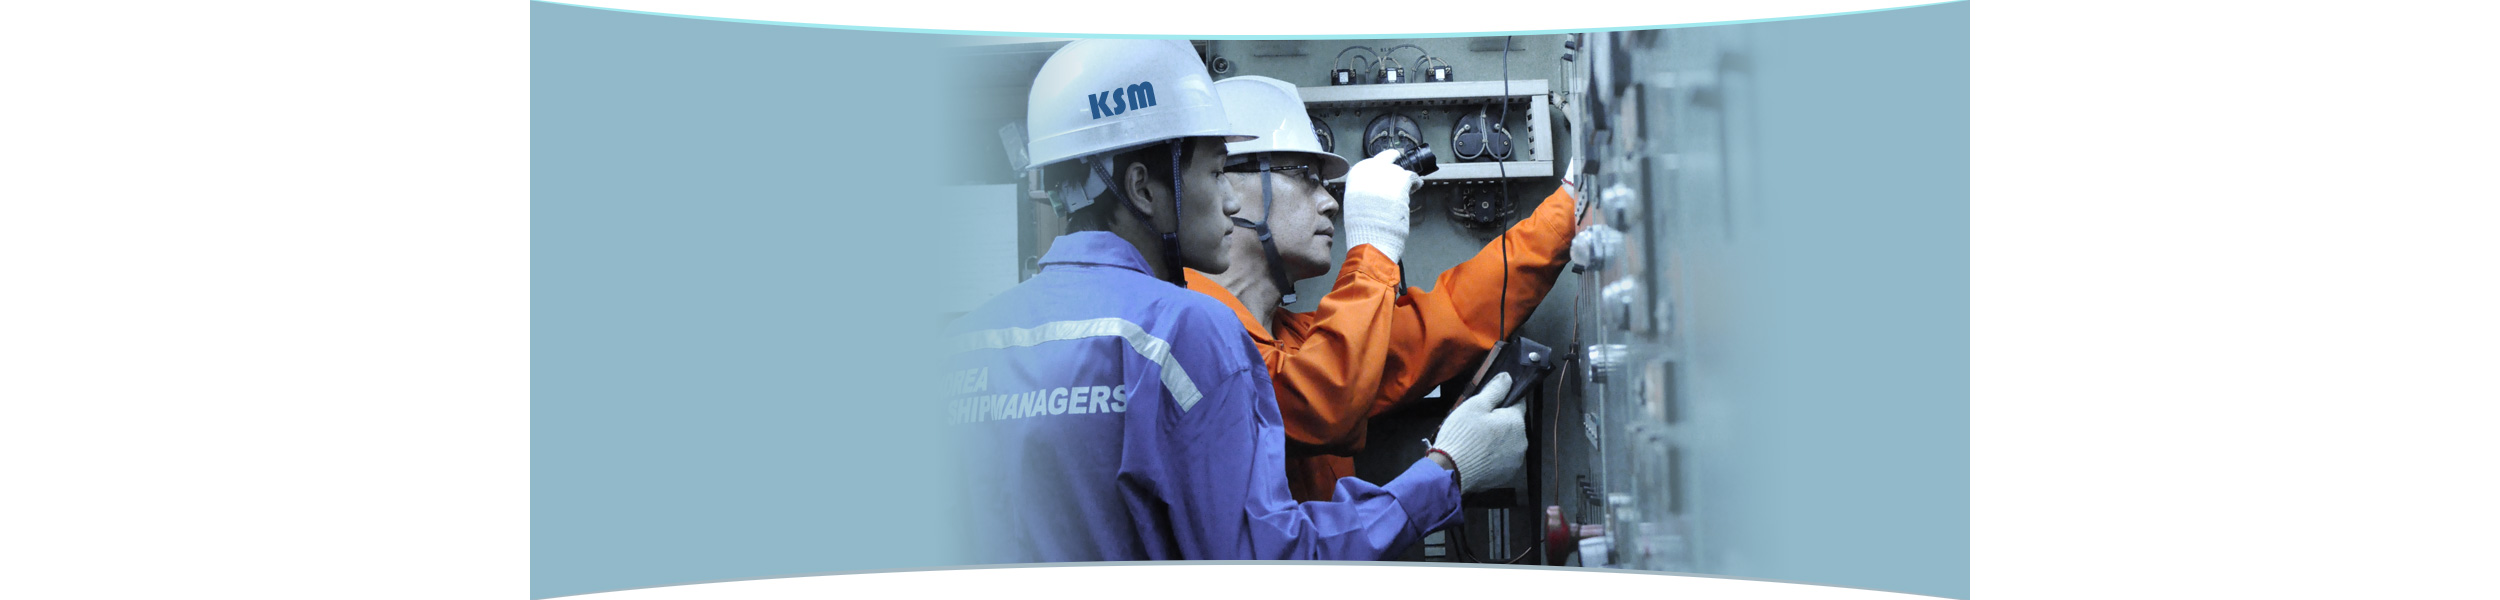 Korea Shipmanagers Co., Ltd.